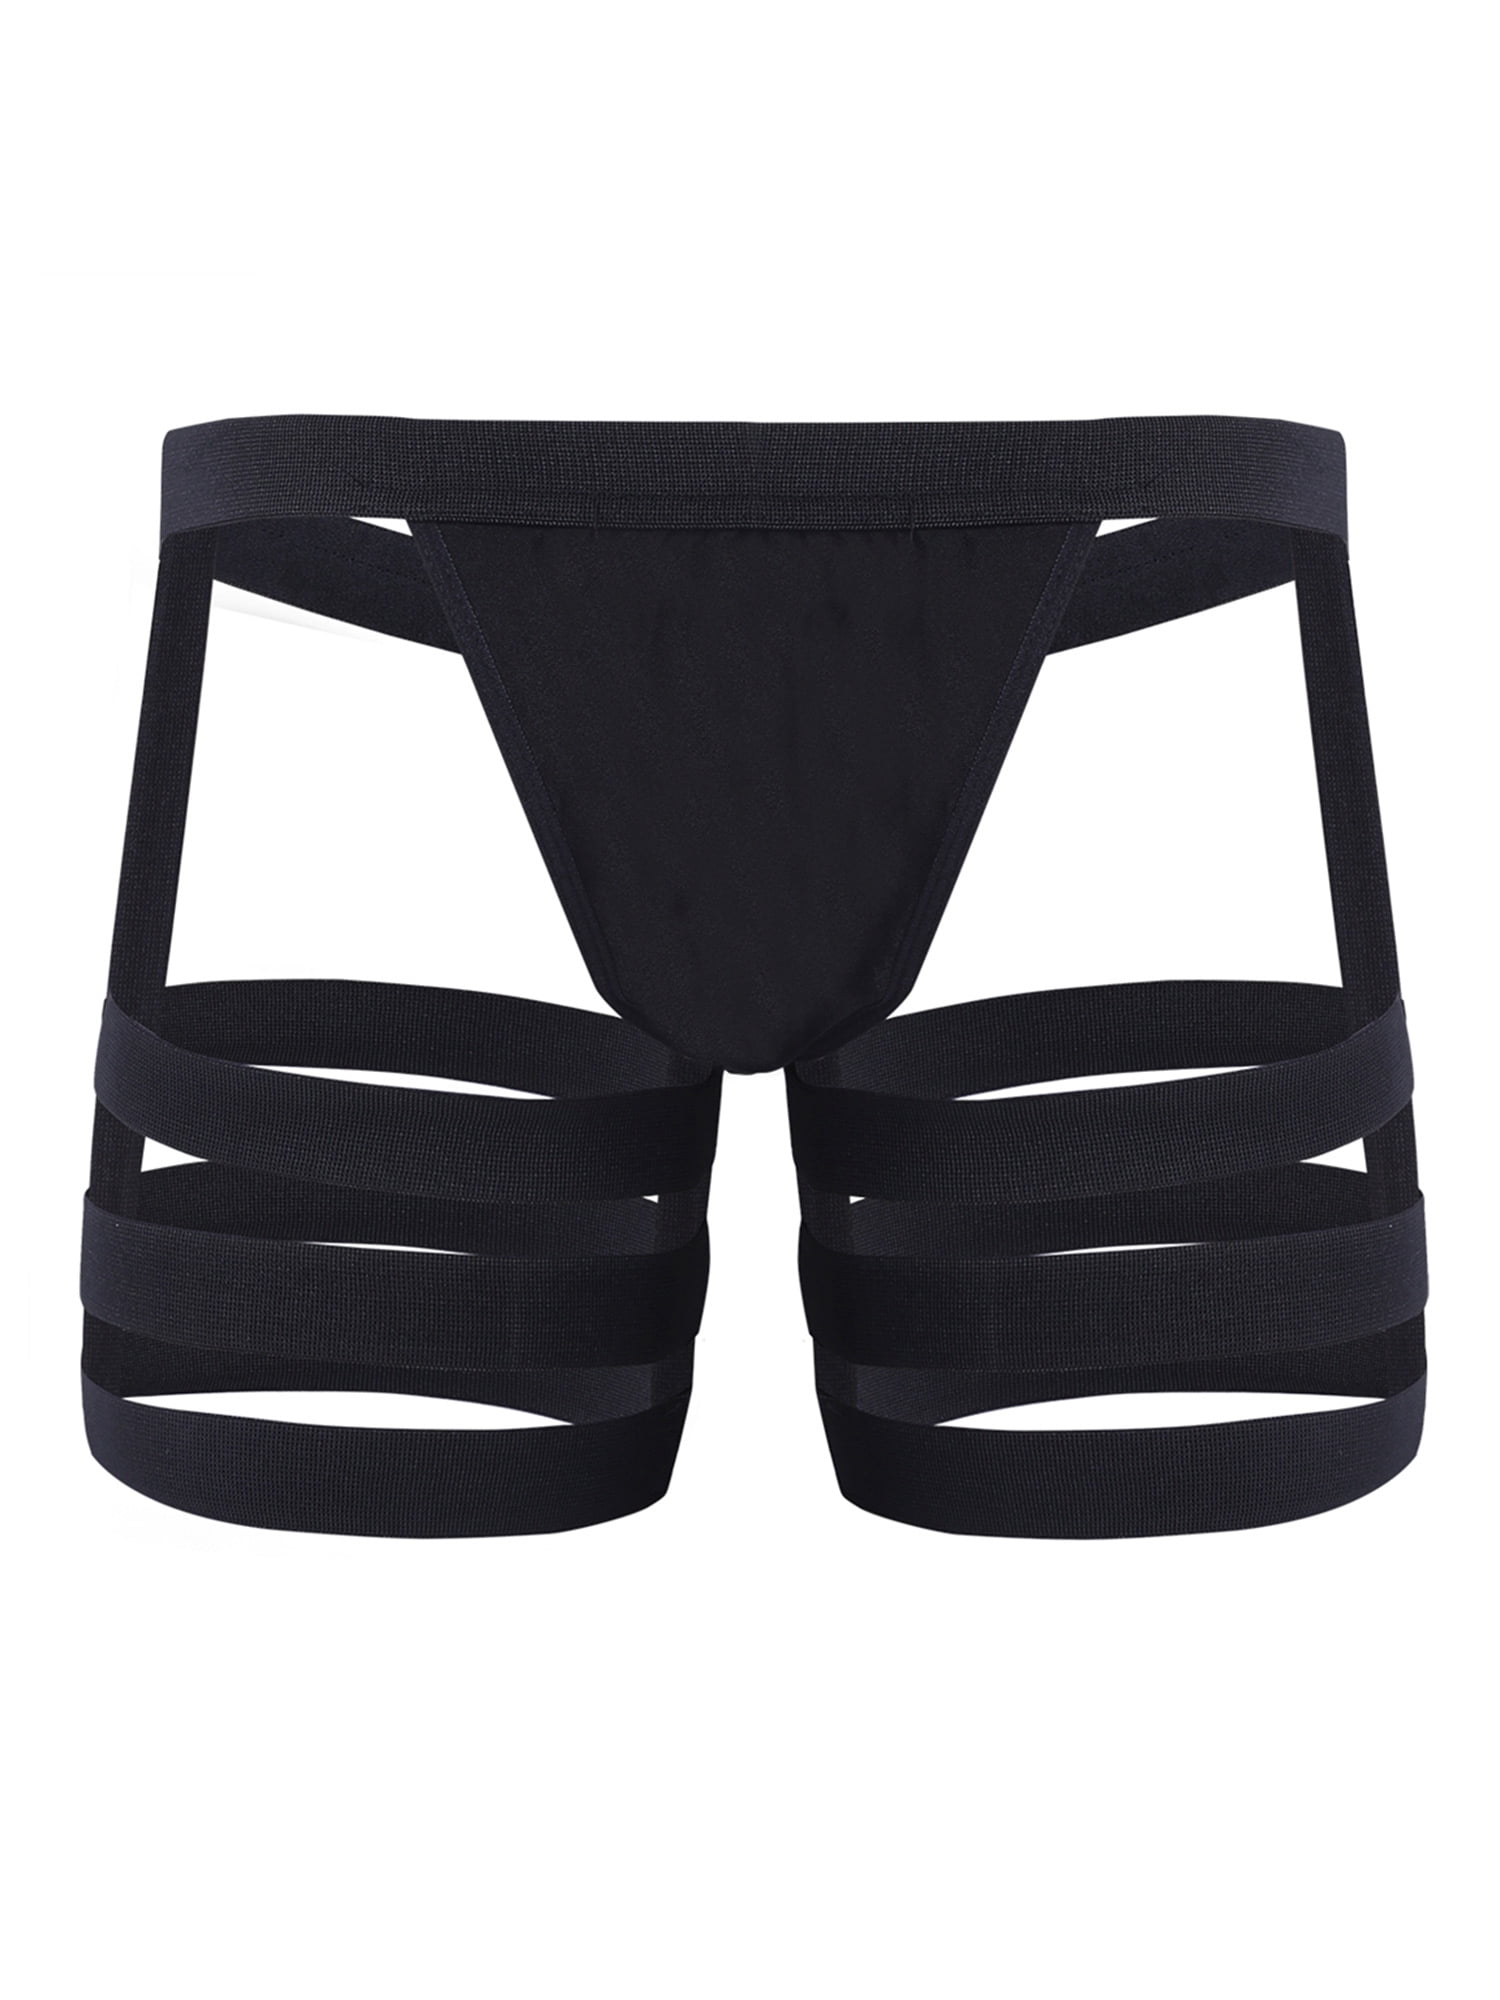 iEFiEL Men Lingerie Bikini Briefs Underwear Underpants with Bulge Pouch ...